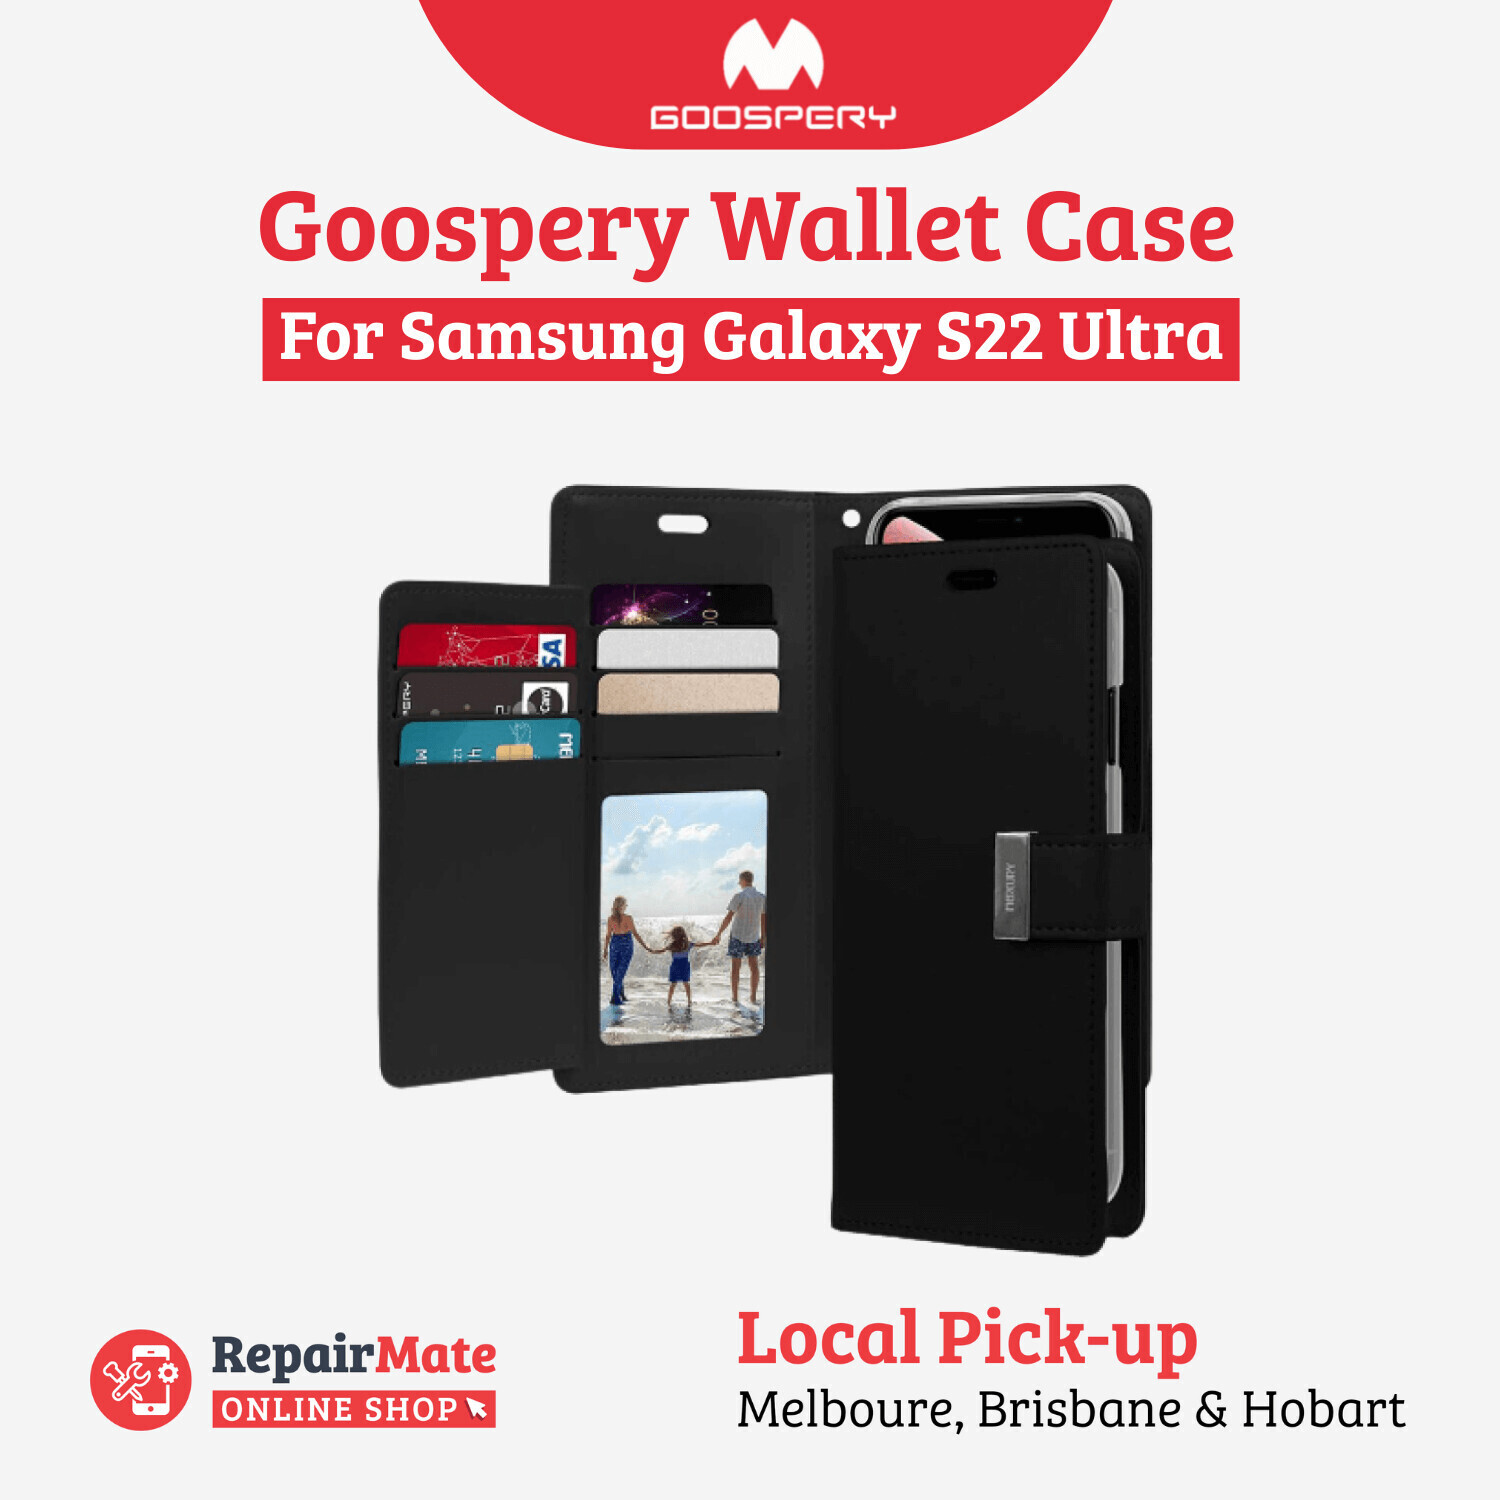 Samsung Galaxy S22 Ultra Goospery Wallet Case